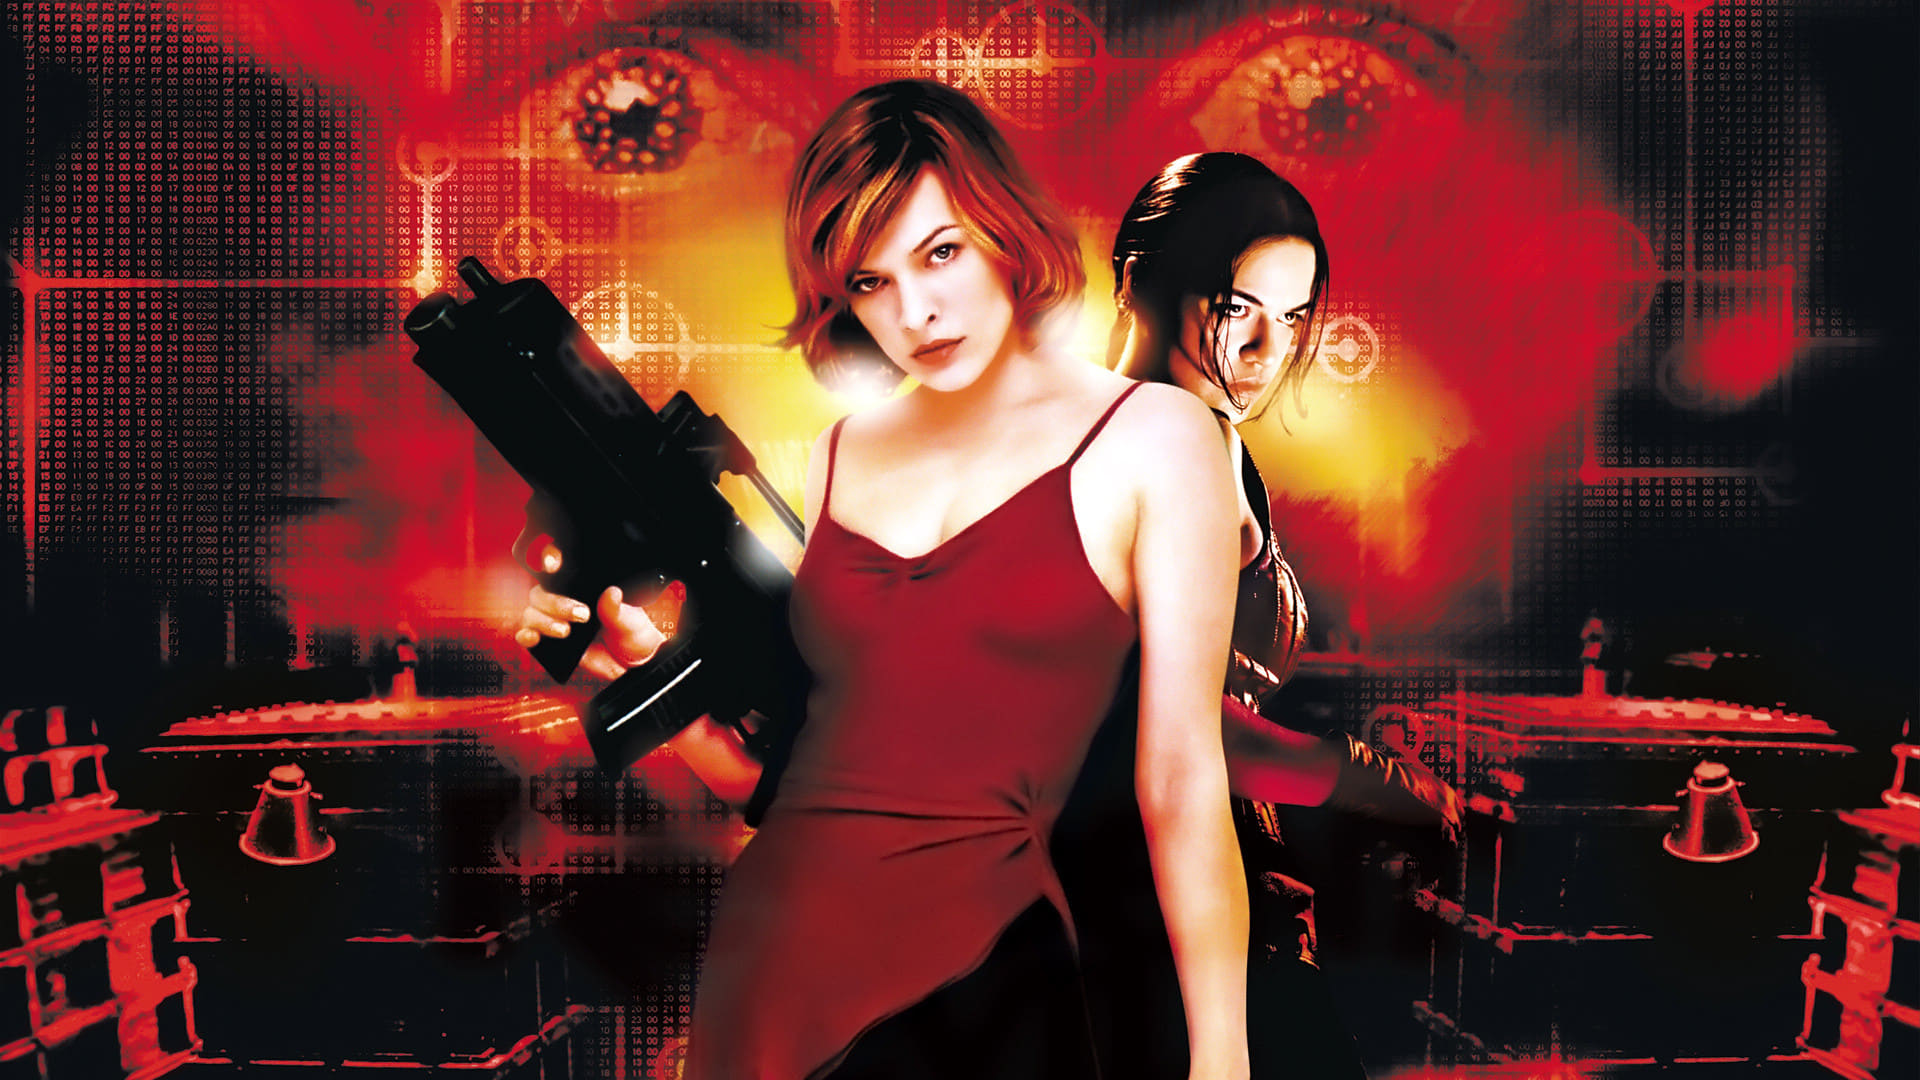 Resident Evil ผีชีวะ (2002)